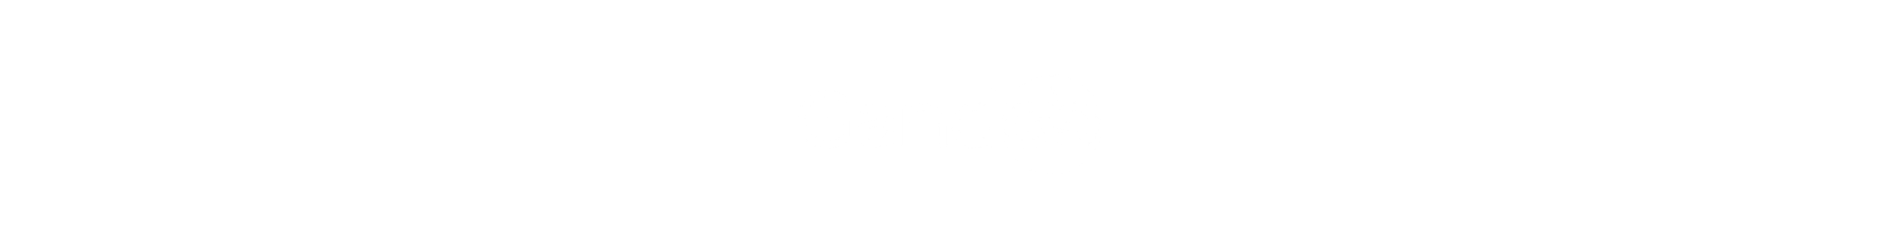 Blog Gandee